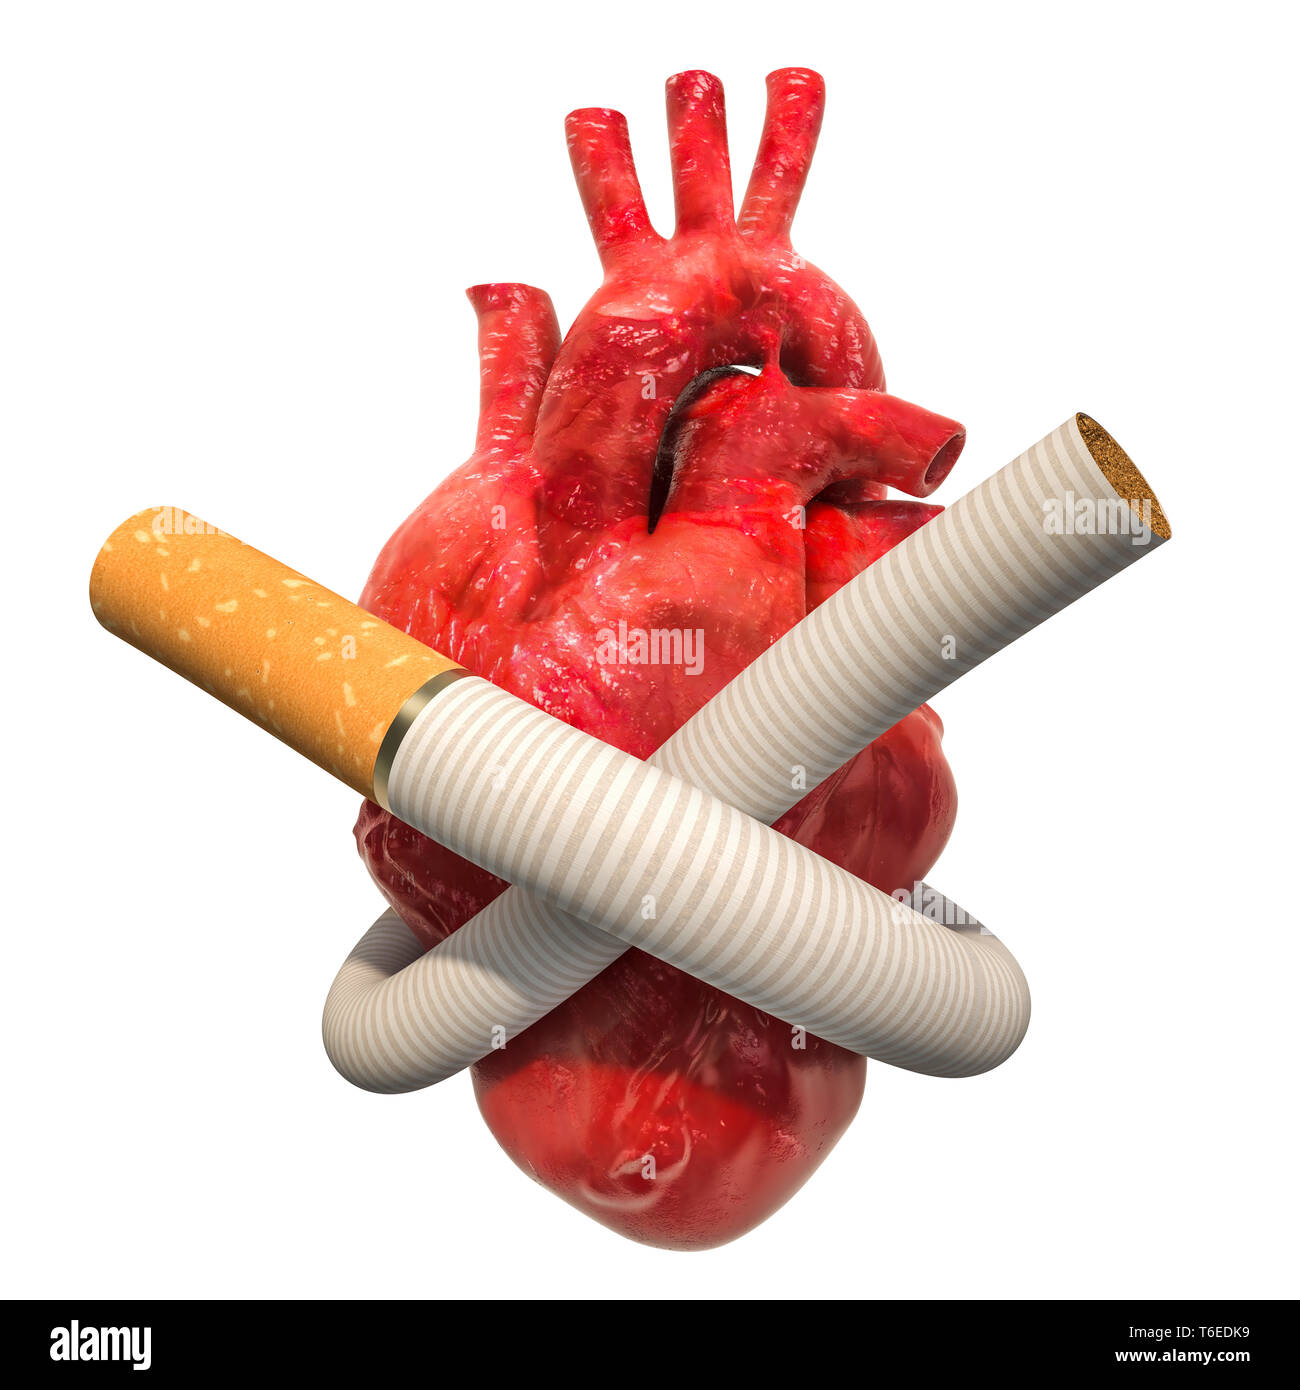 cardiovascular disease smoking